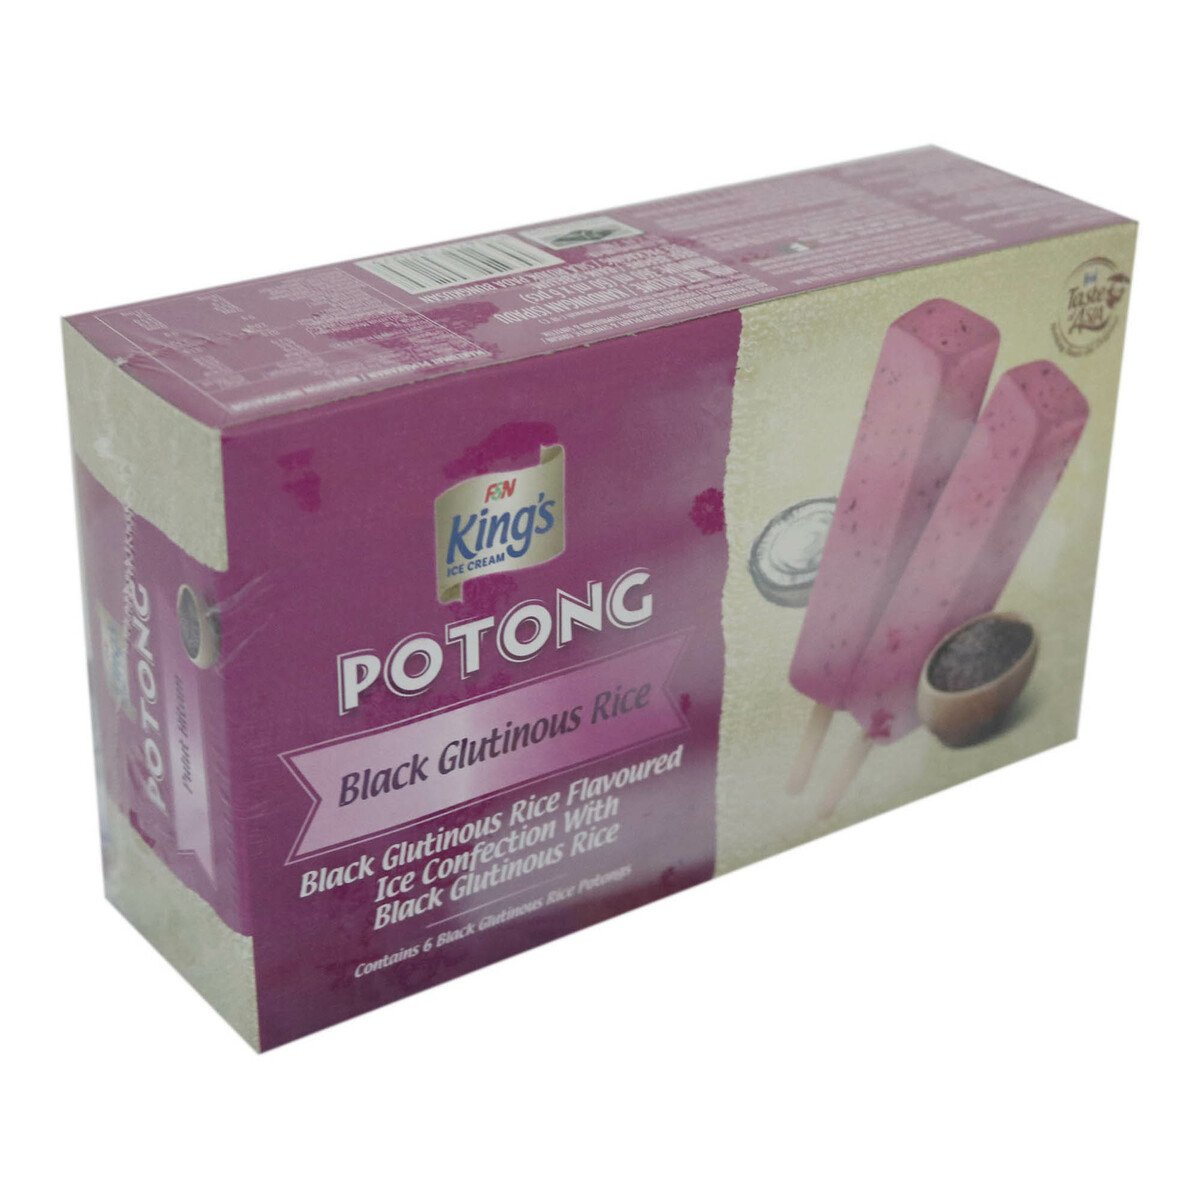 King's Potong Pulut Hitam Pack 6 x 60ml